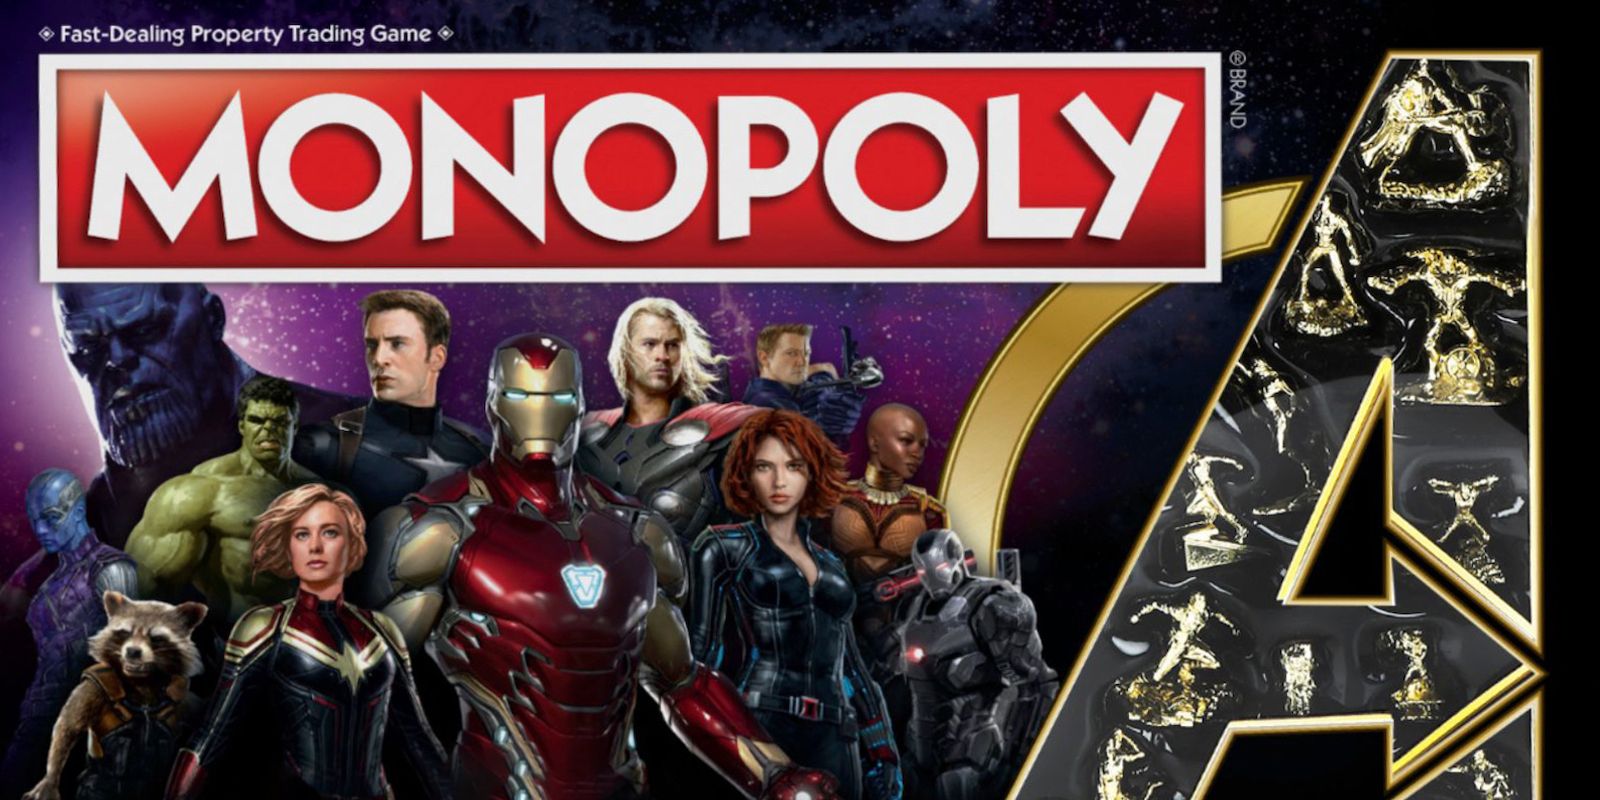 monopoly avengers